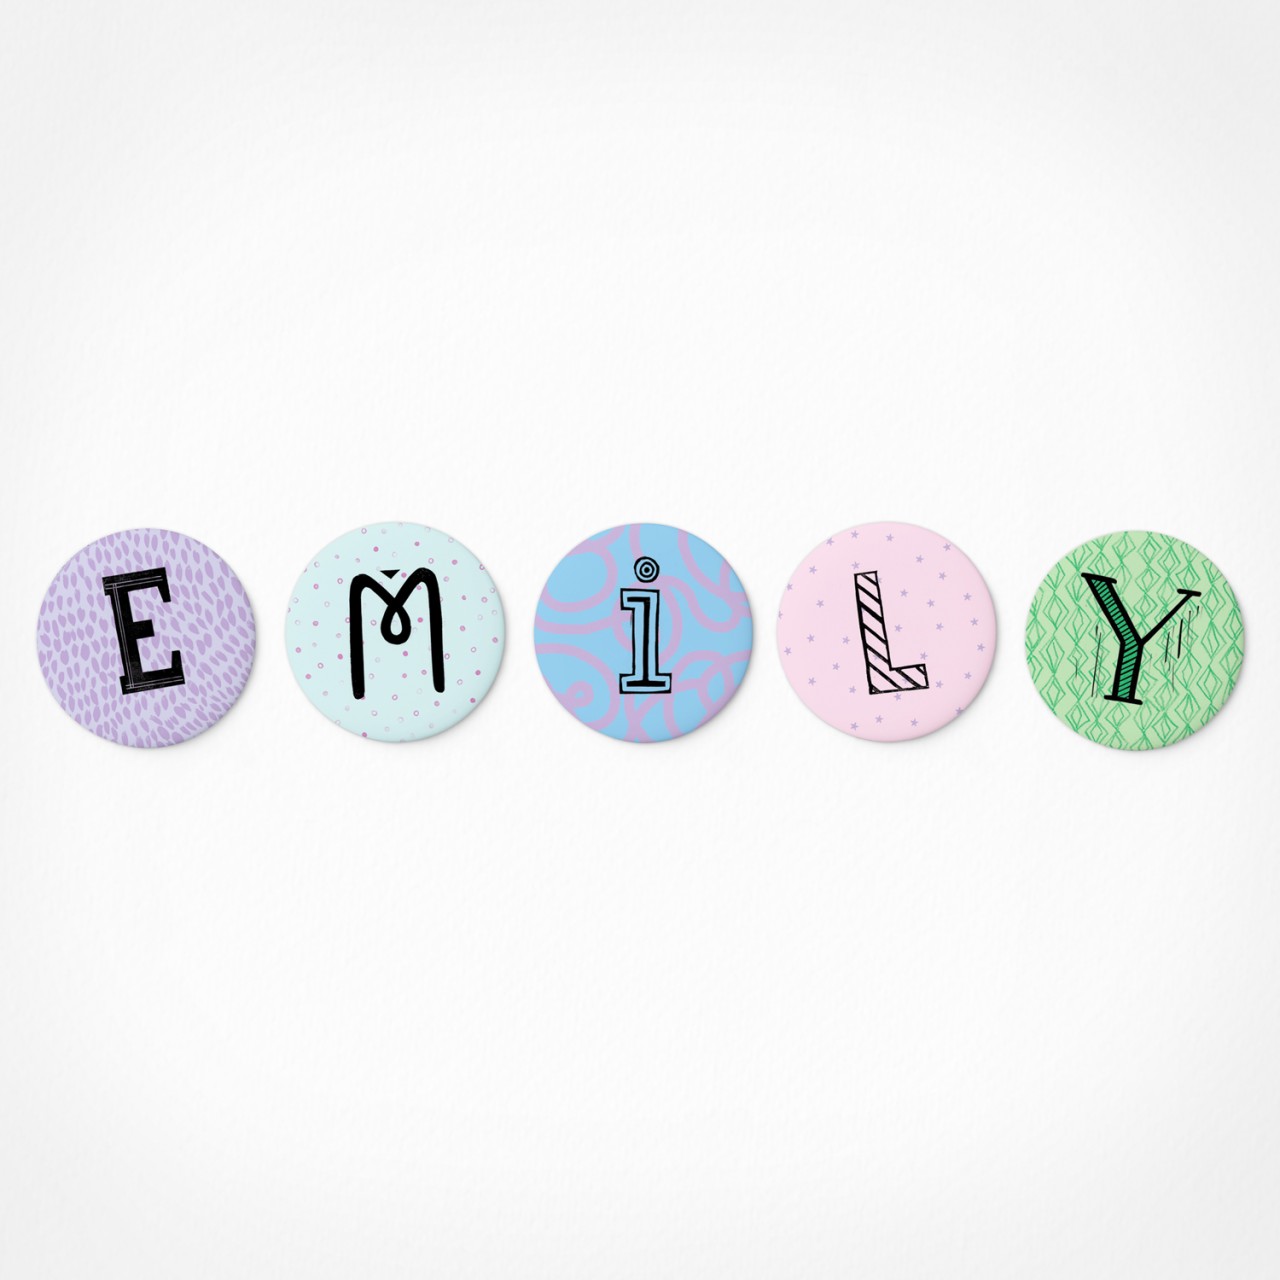 Emily | Magnetbuchstaben Set | 5 Magnete